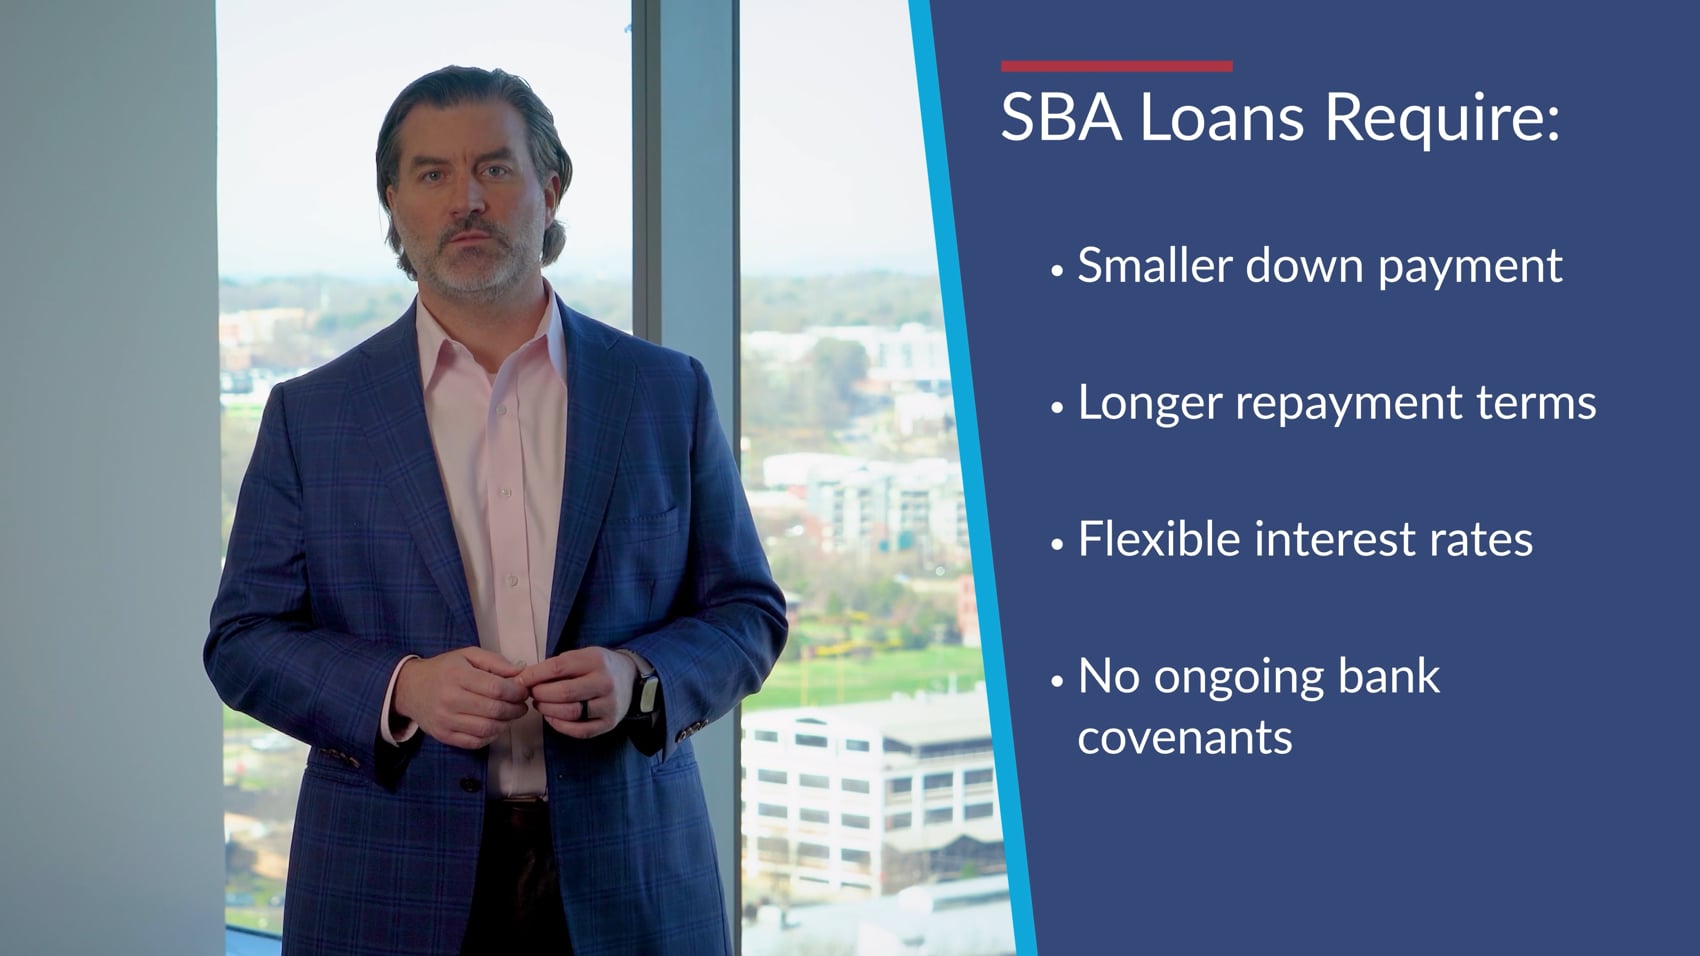 Why Choose an SBA Loan?